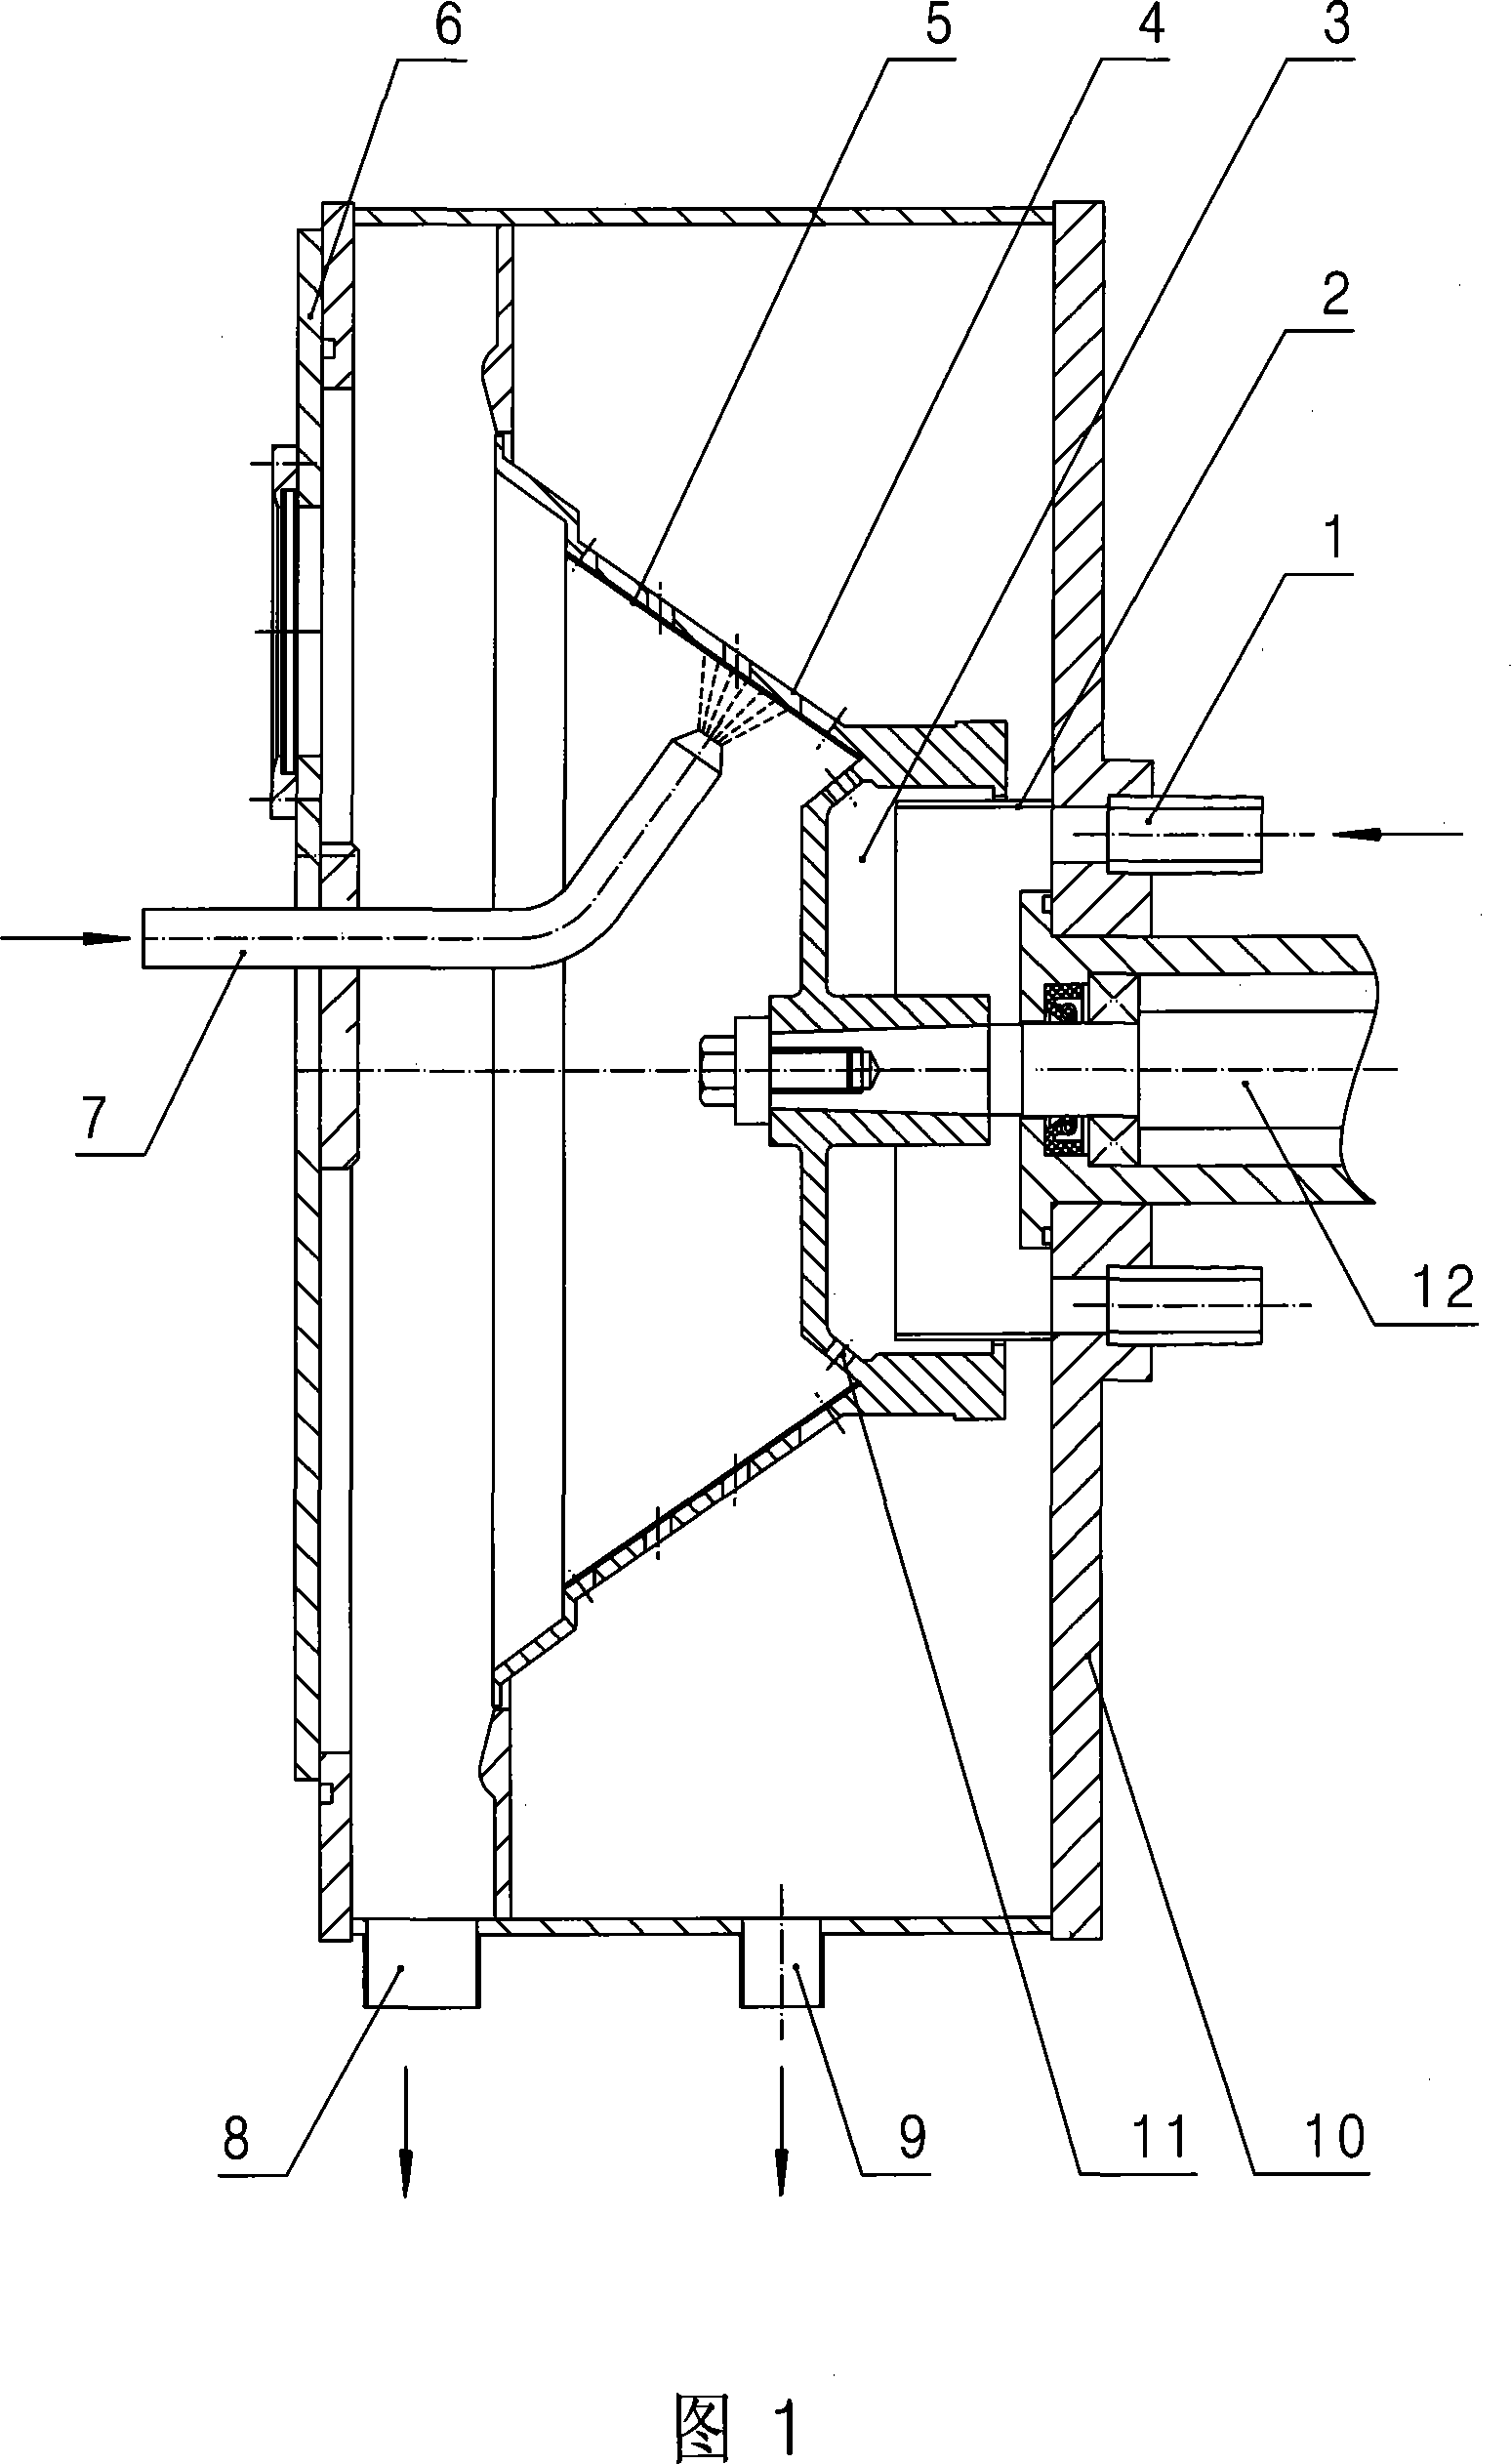 Feeder unit of the centrifugal discharging type centrifugal machine